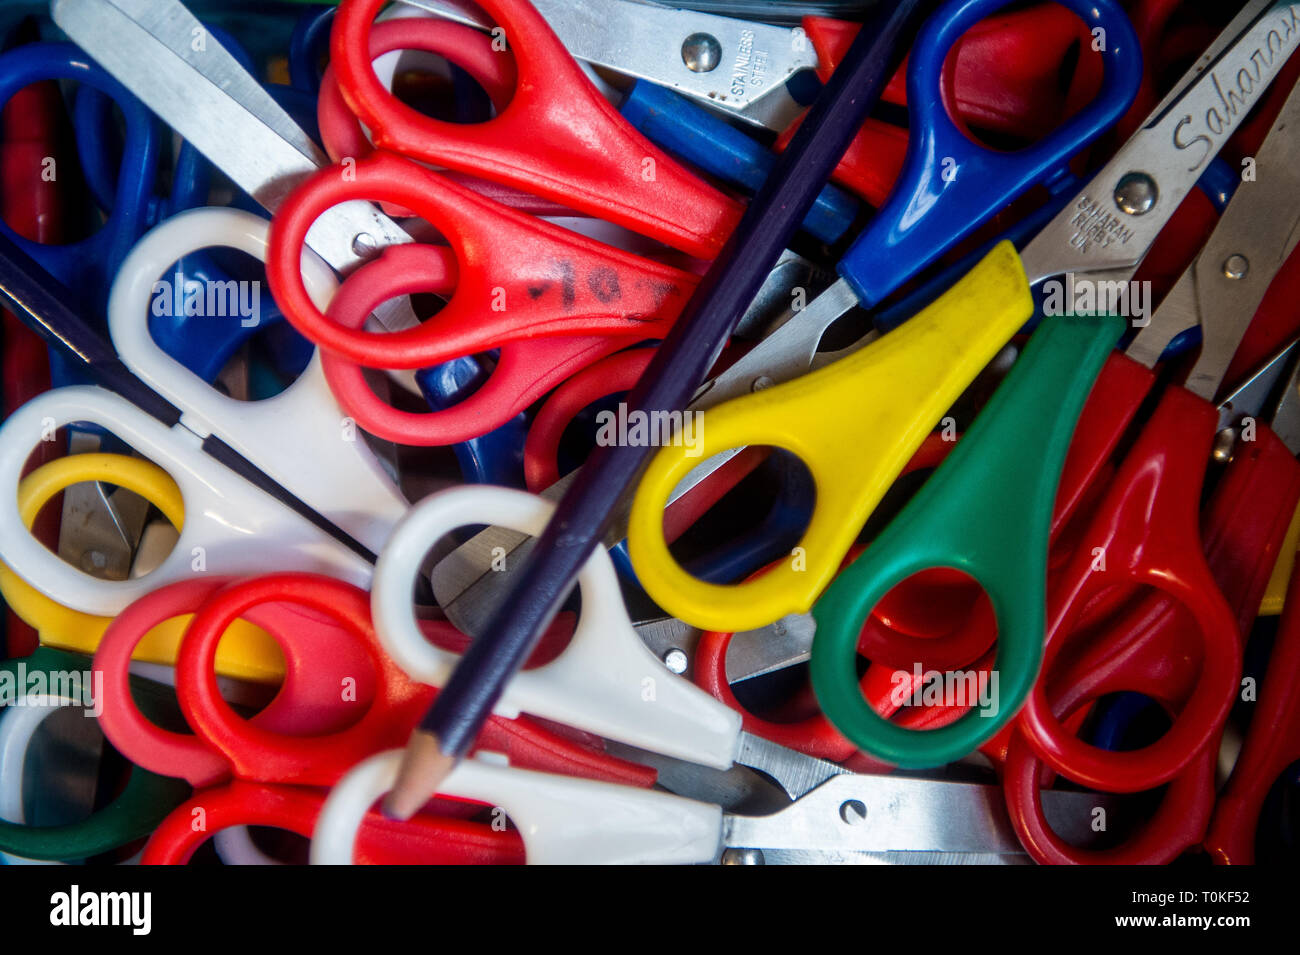 Colourful scissors Stock Photo